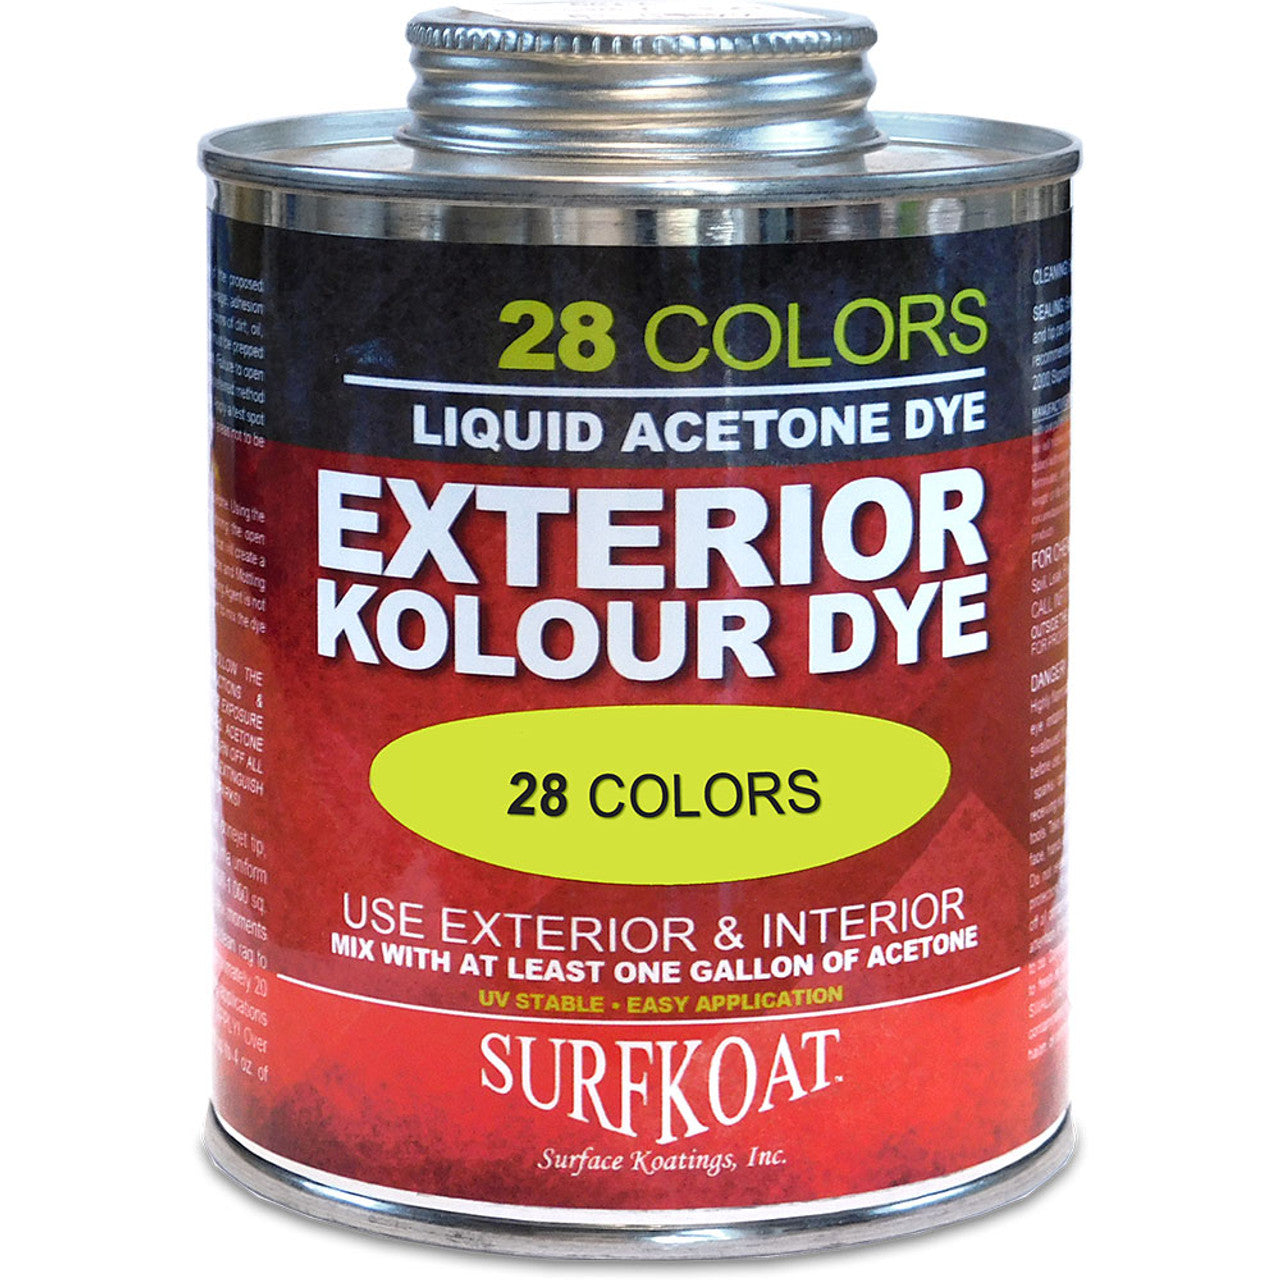 Kolour Dye (Turquoise) 5 Gallon Concentrate